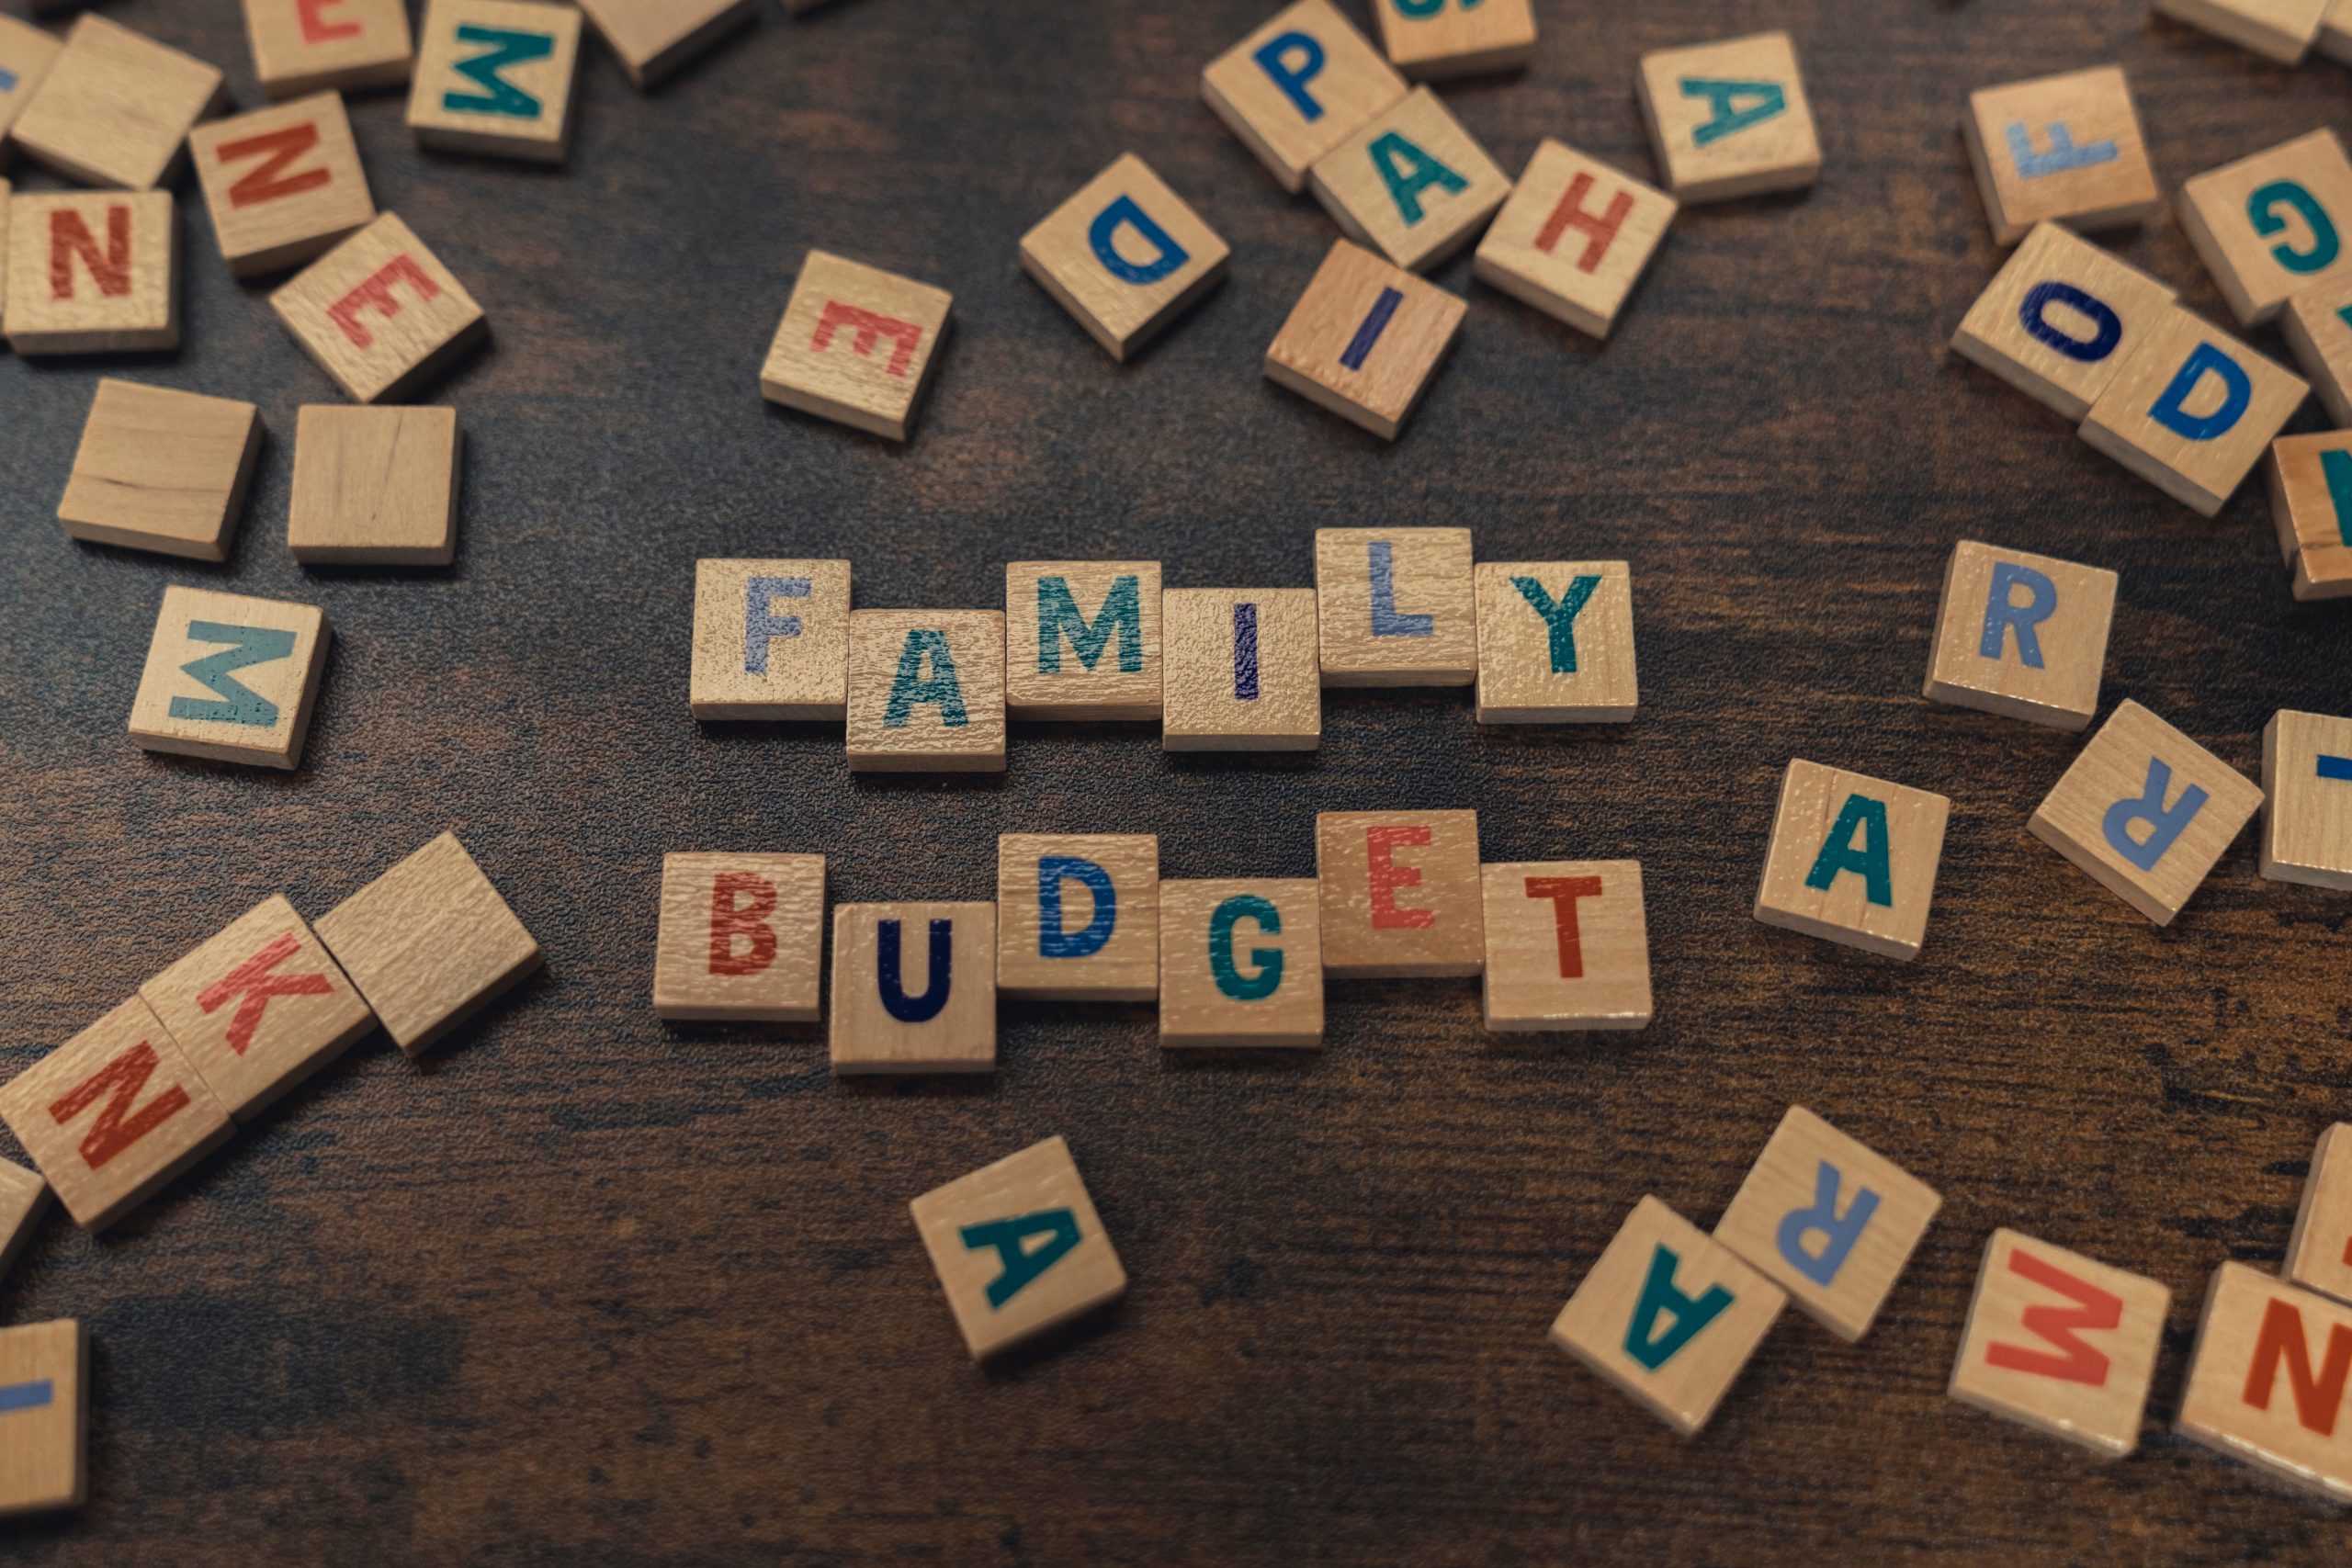 Family budget tiles